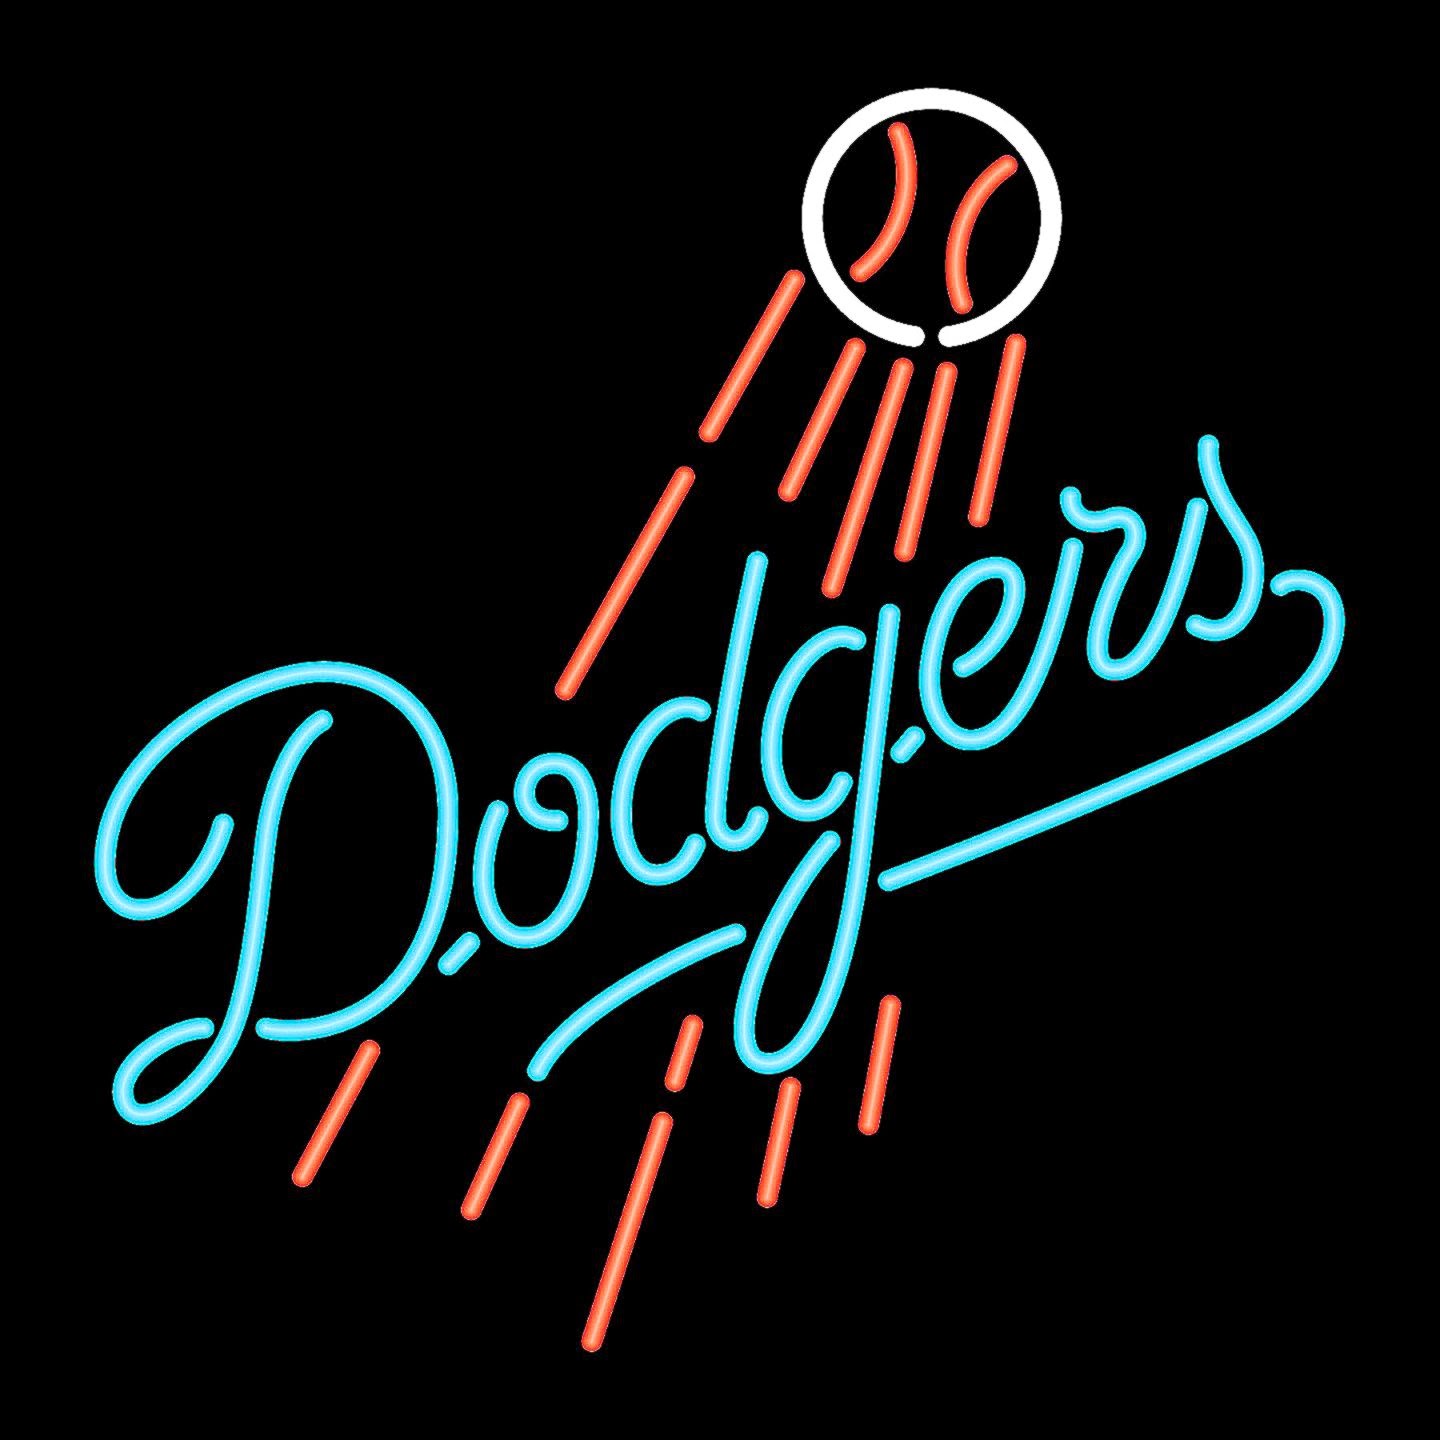 Dodgers Wallpaper Cool HD